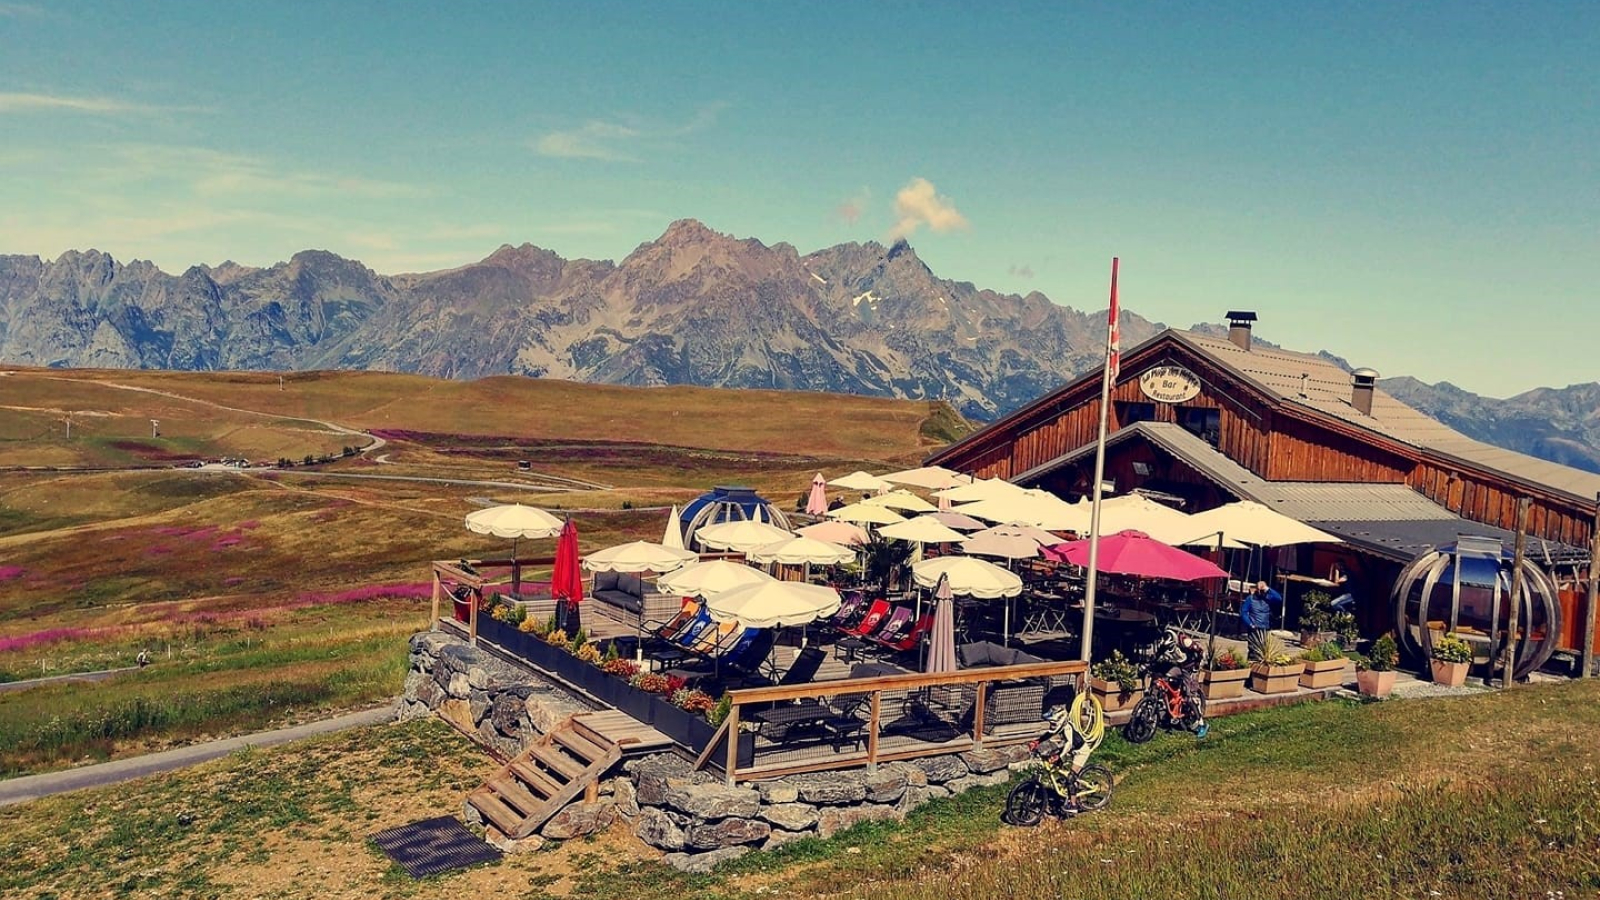 Mountain restaurant Alpe d'Huez